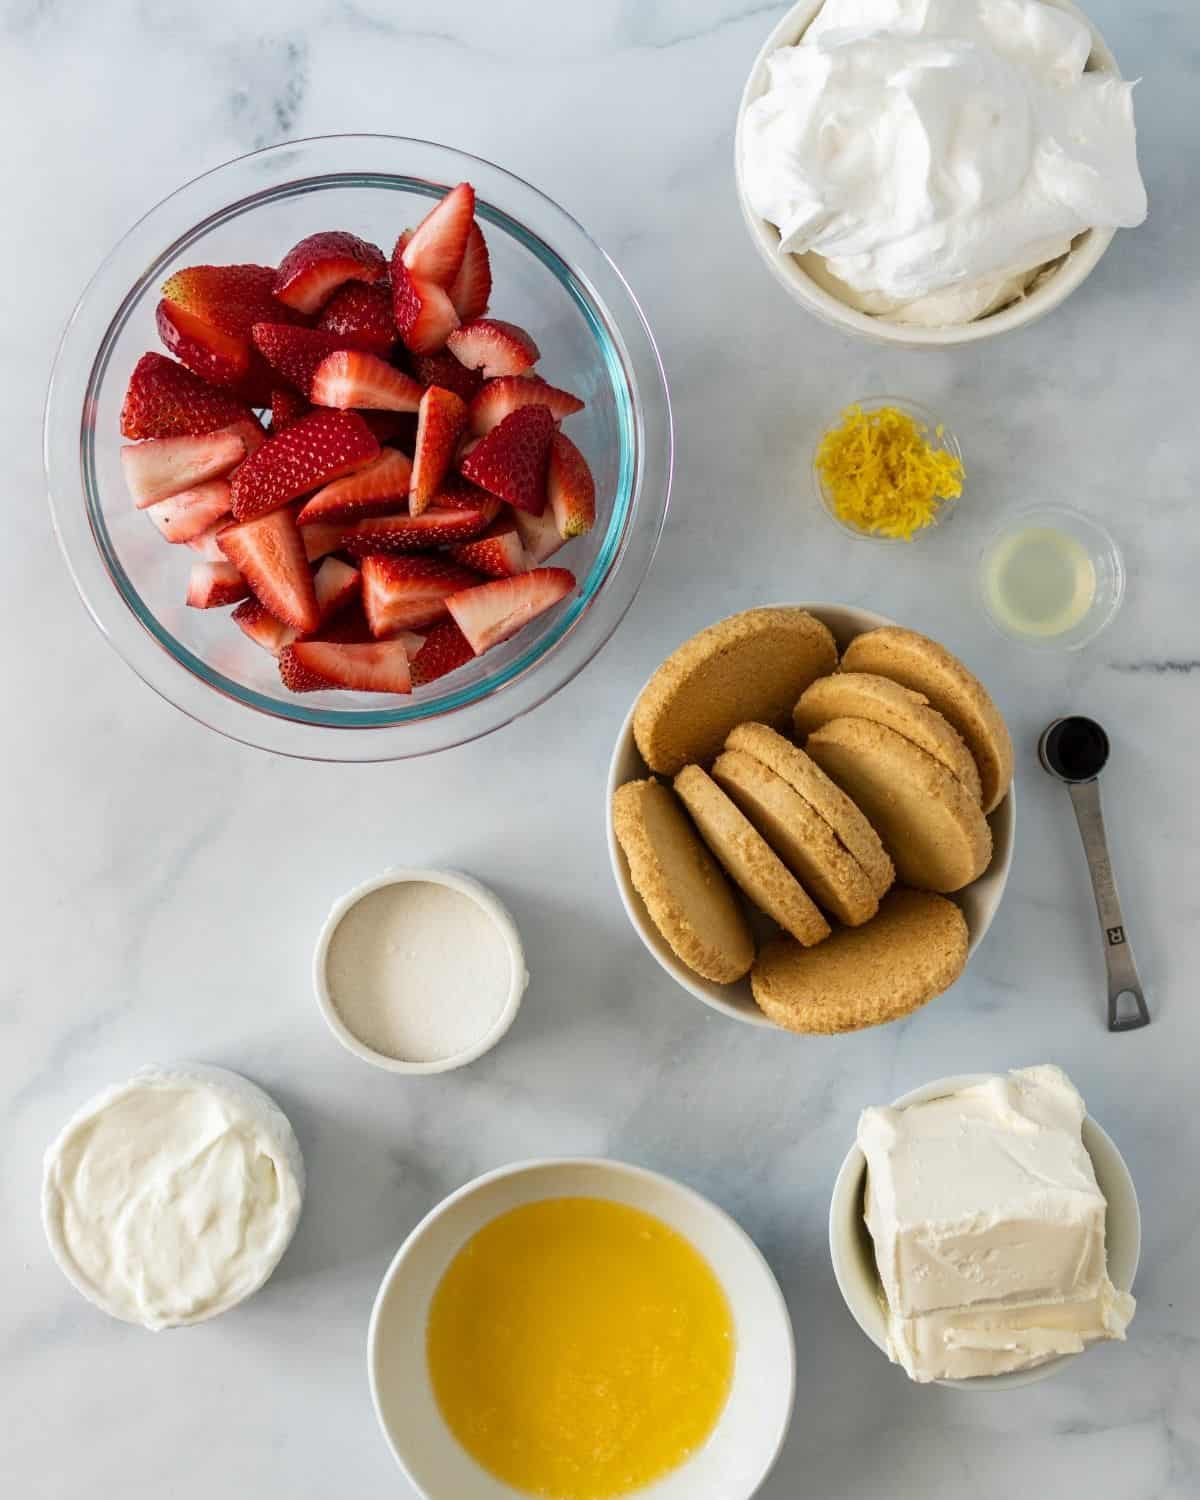 The ingredients to make no-bake strawberry cheesecake